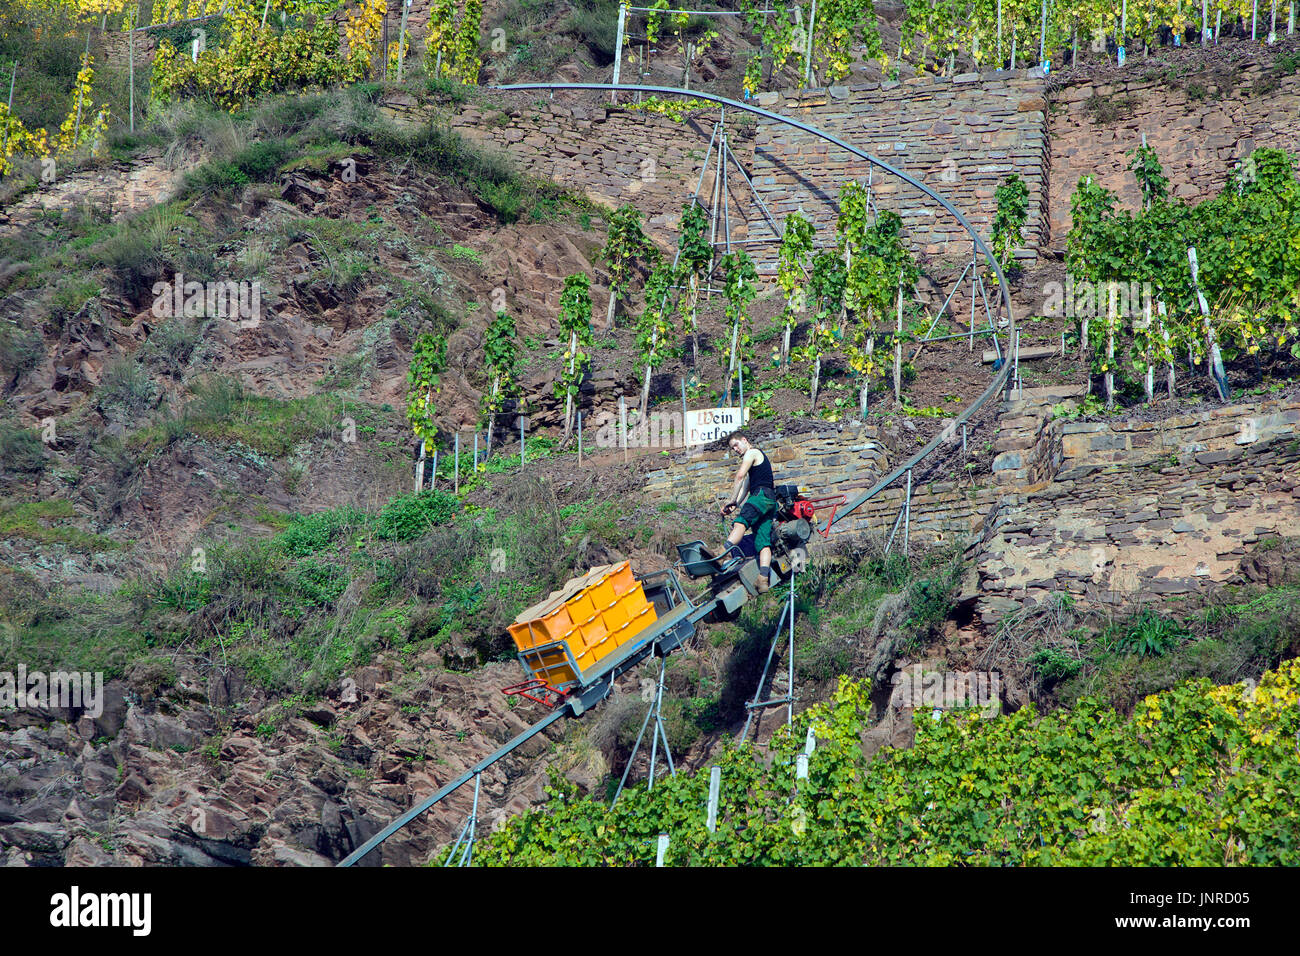 Grape harvest with monorack railway at the steep Calmont vineyard, Bremm, Moselle, Rhineland-Palatinate, Germany, Europe Stock Photo